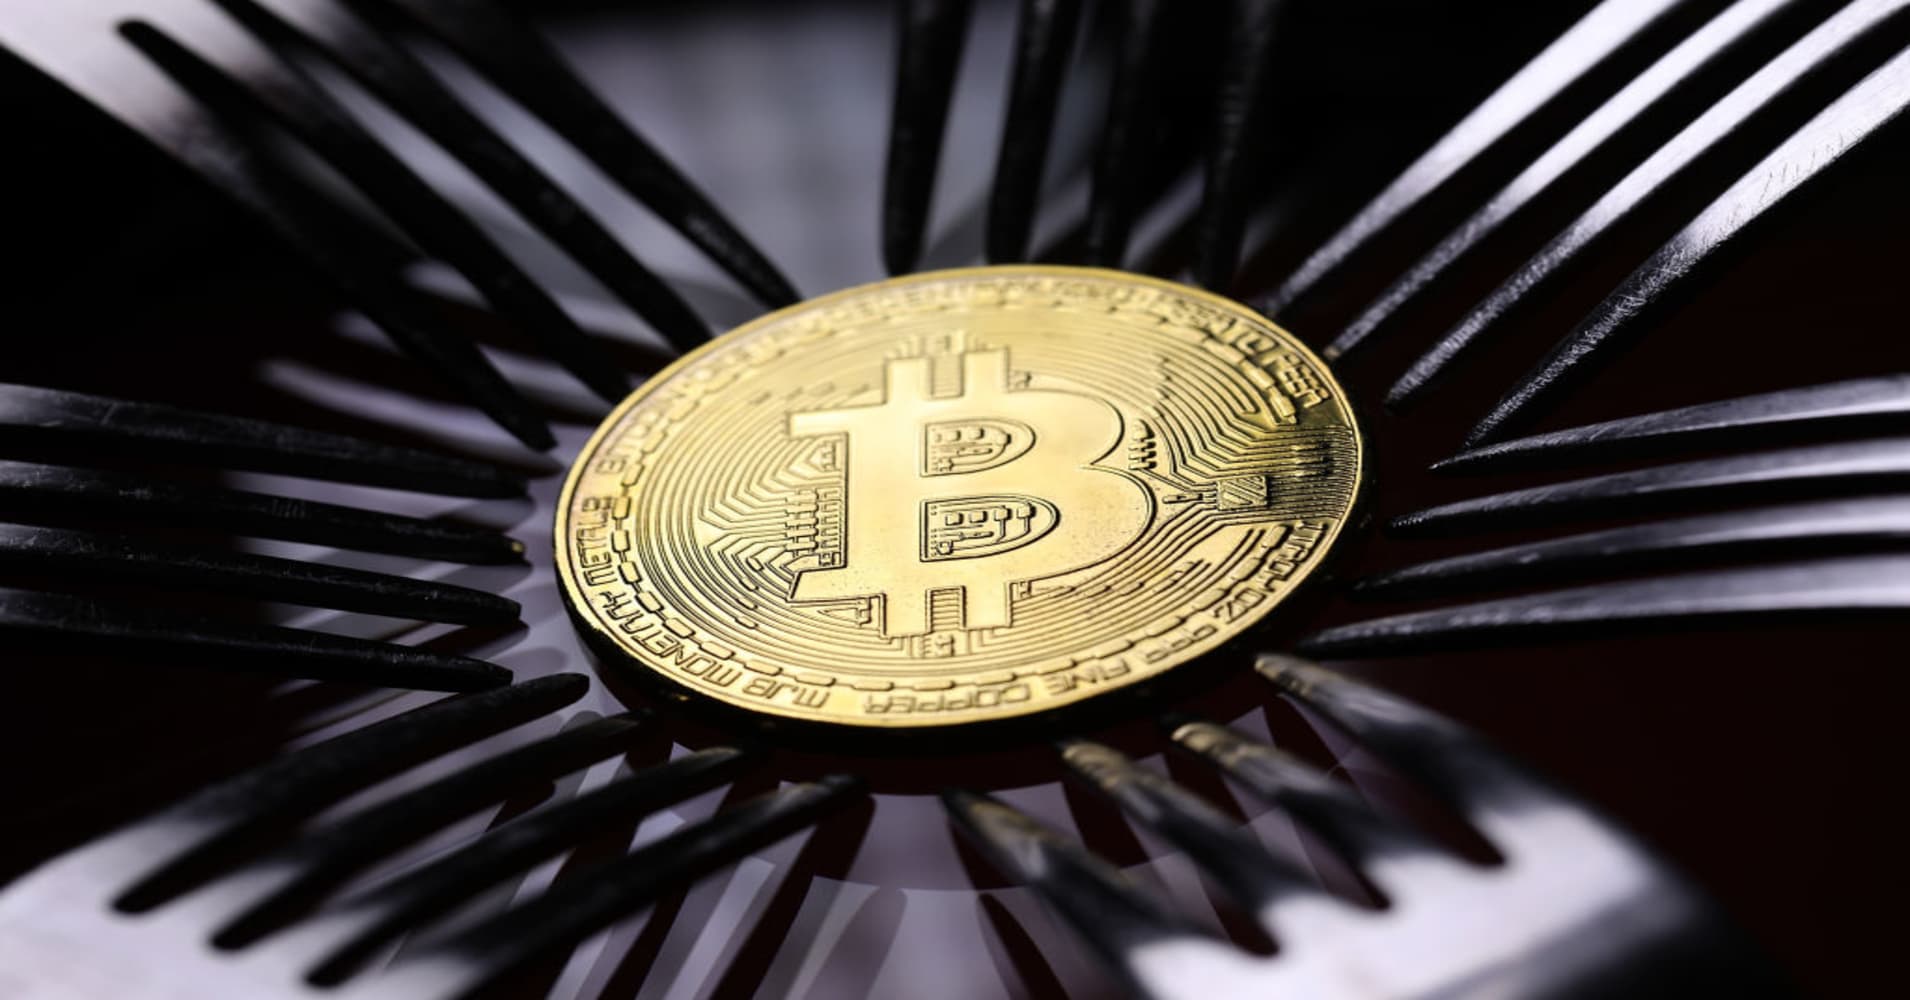 DOJ to investigate bitcoin price manipulation: Report